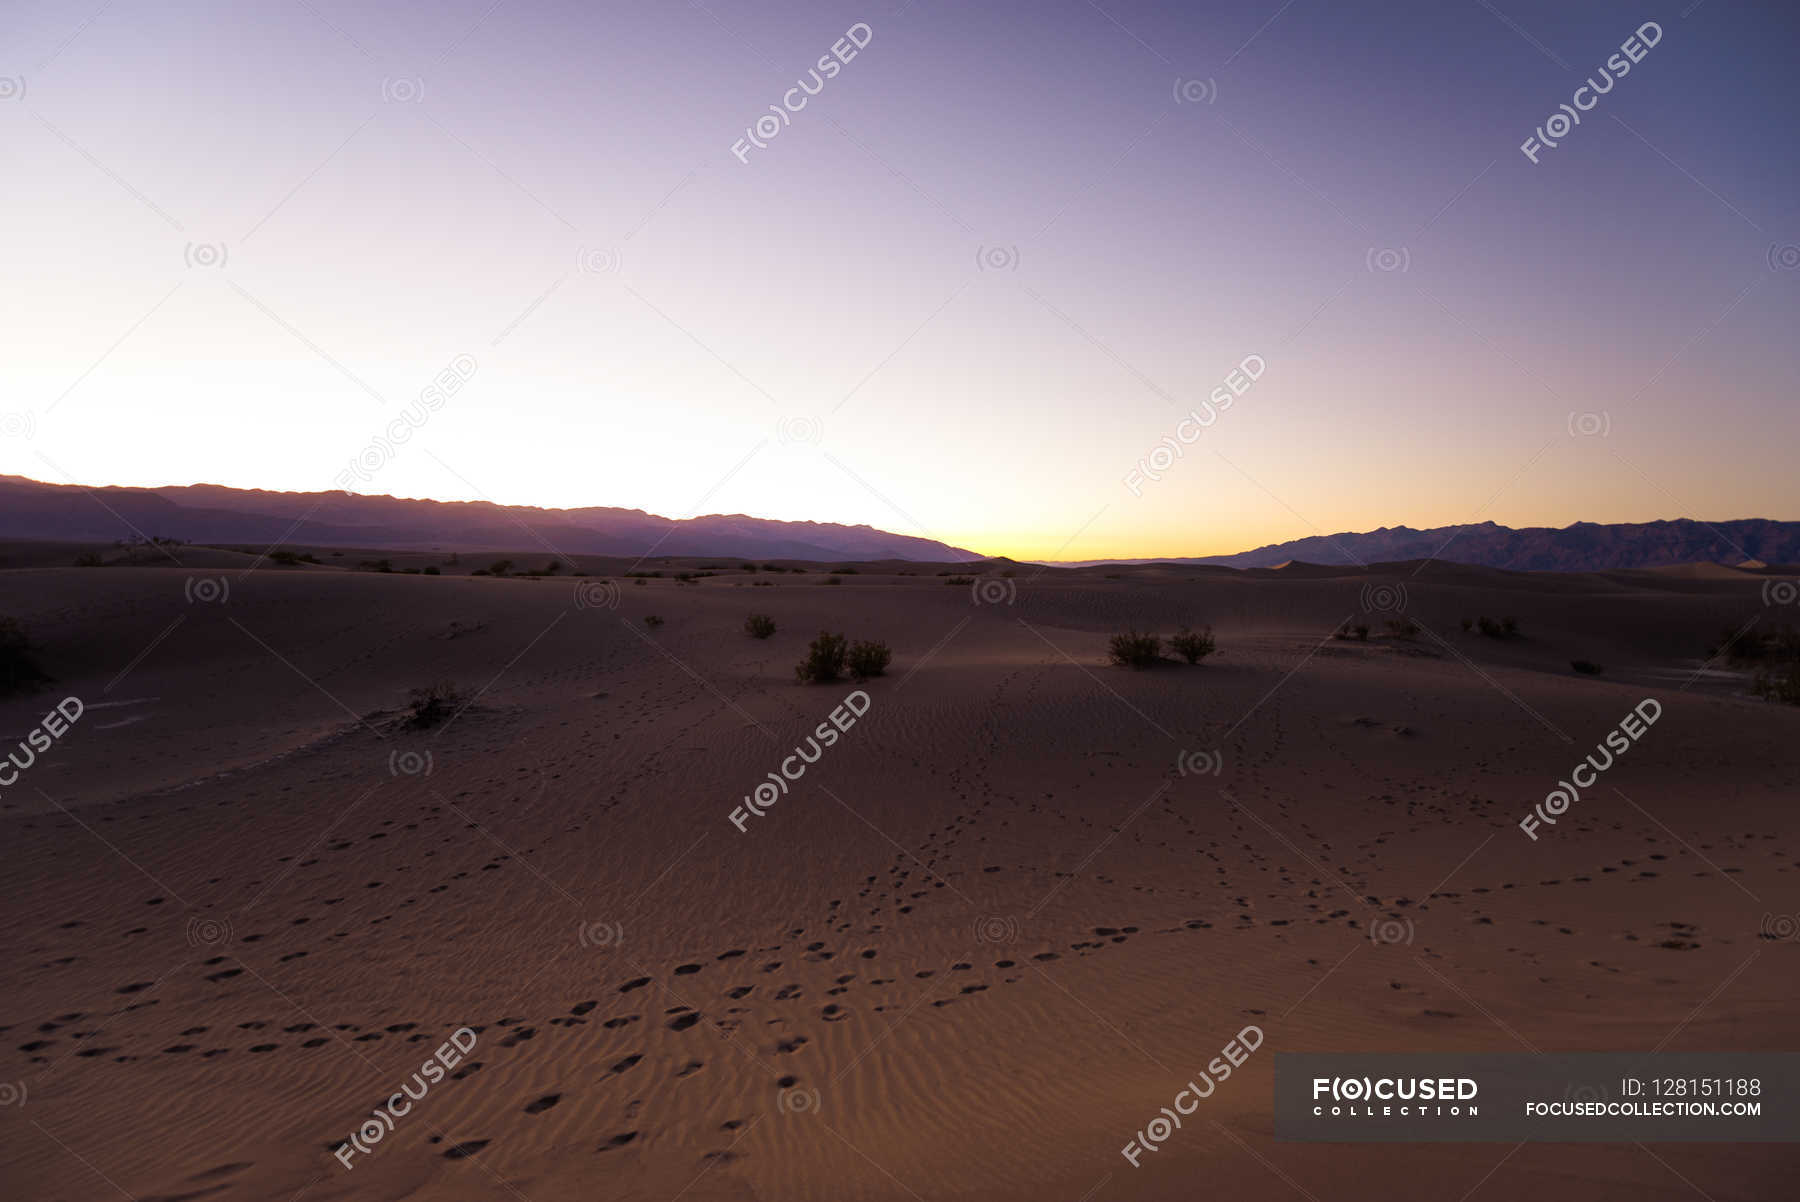 Mesquite Flat Sand Dunes — travel, sky - Stock Photo | #128151188